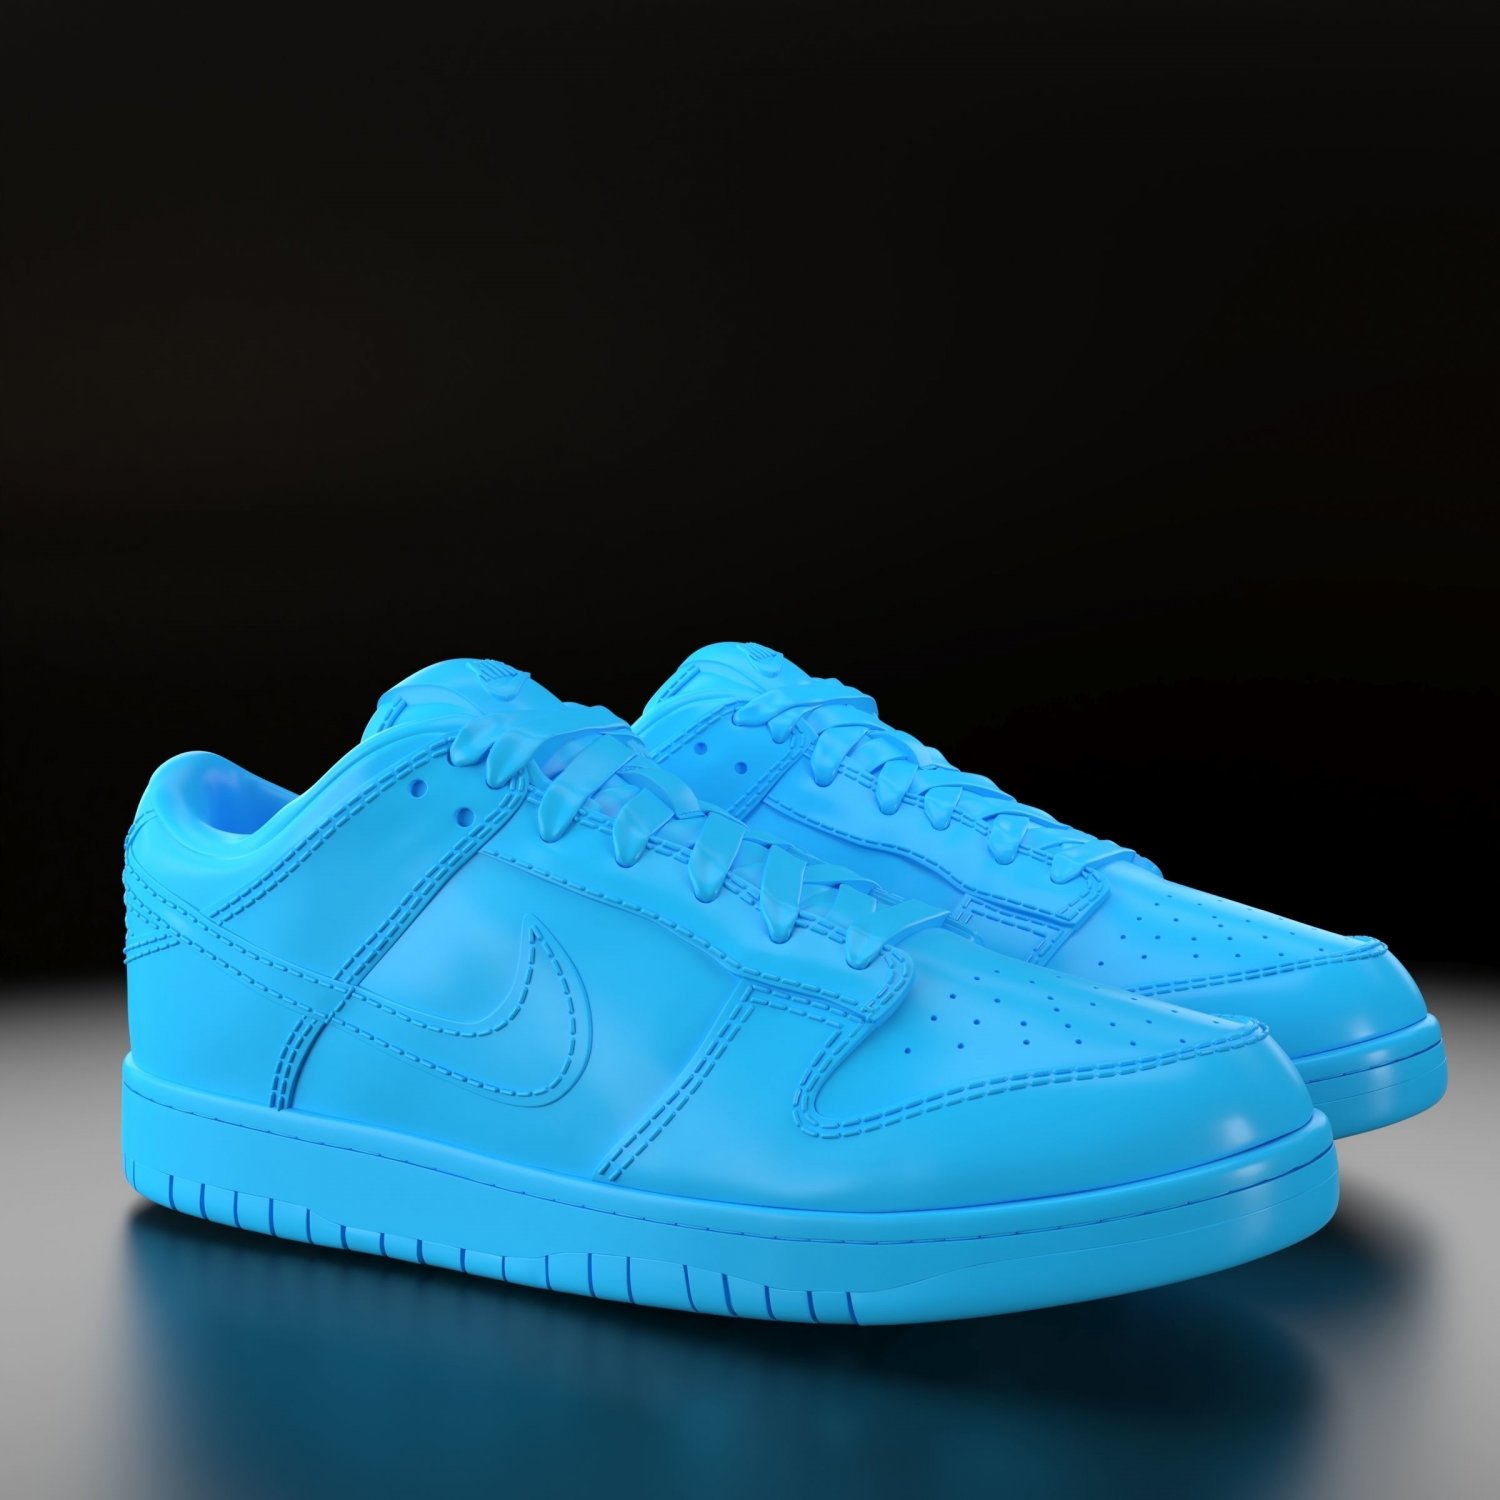 Off White x Nike Dunk University Blue Shoe - Buy Royalty Free 3D